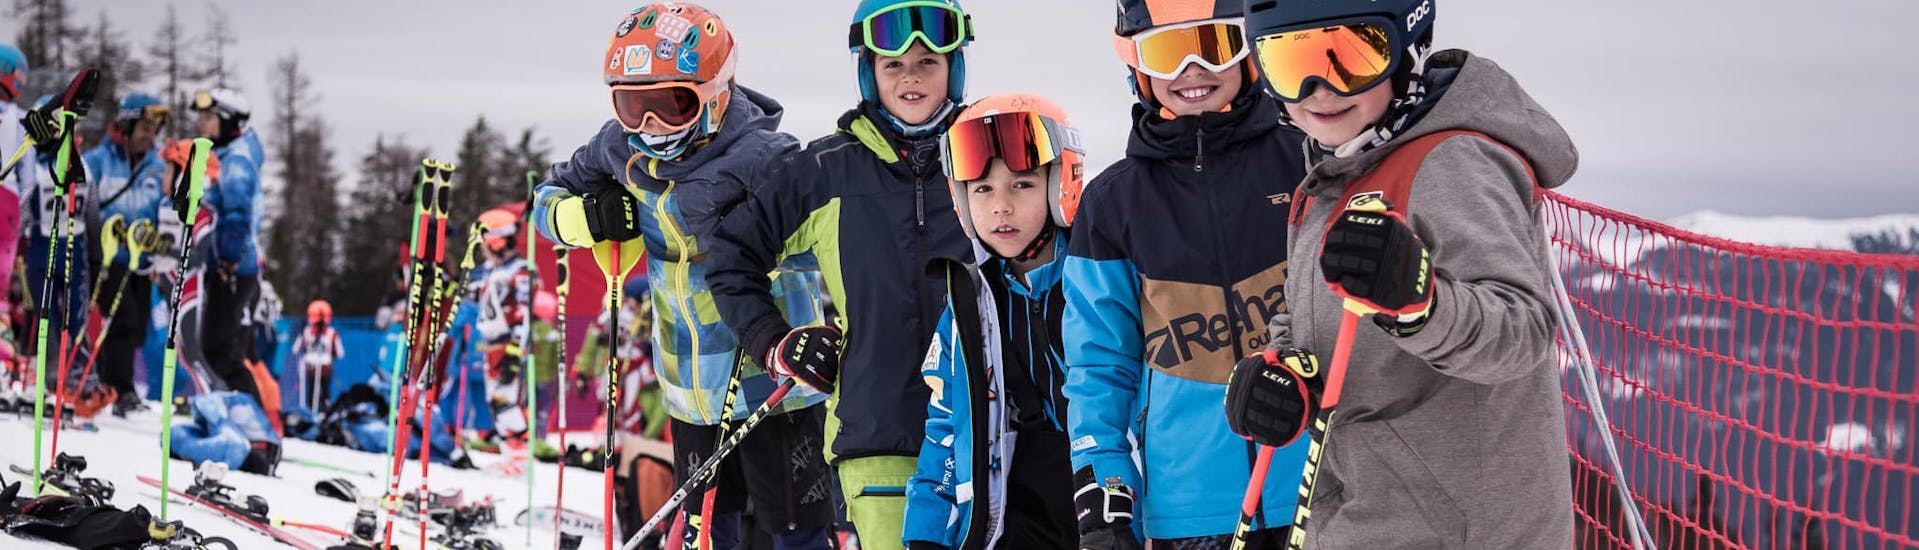 Kids after Kids Ski Lessons (5-13 y.) for Advanced - Half Day in Kronschool Valdaora.